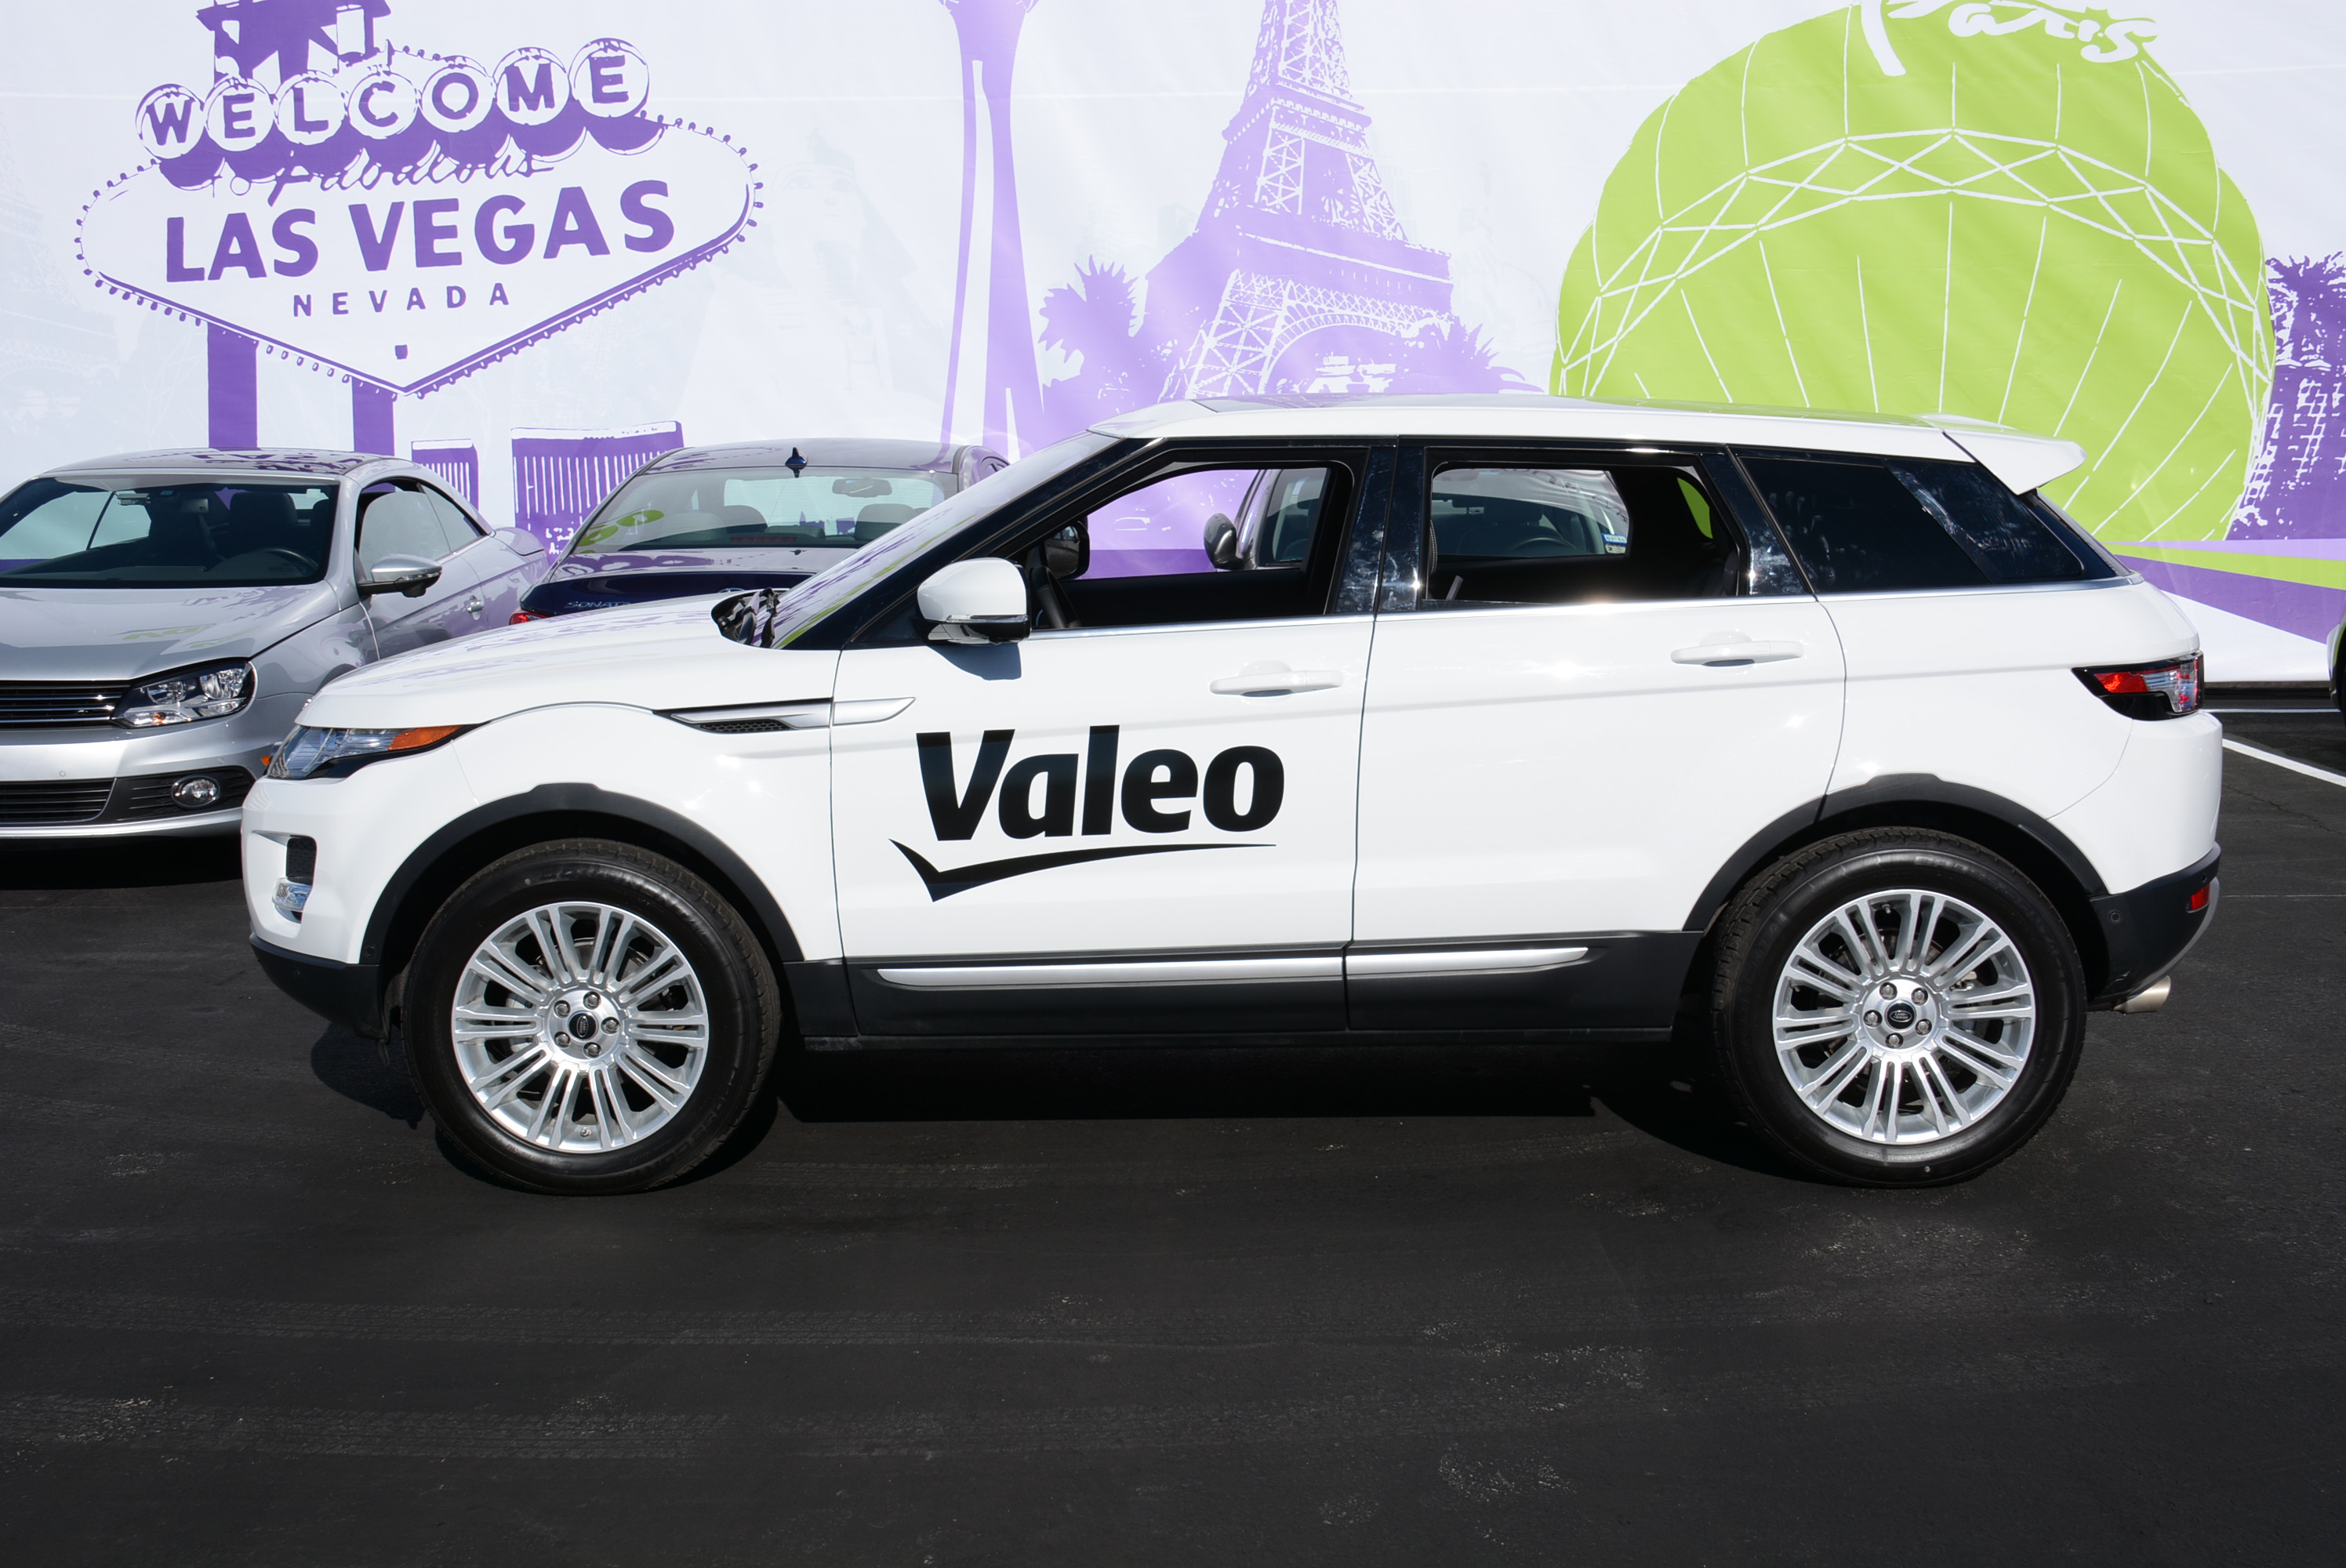 Valeo demo car at CES Las Vegas